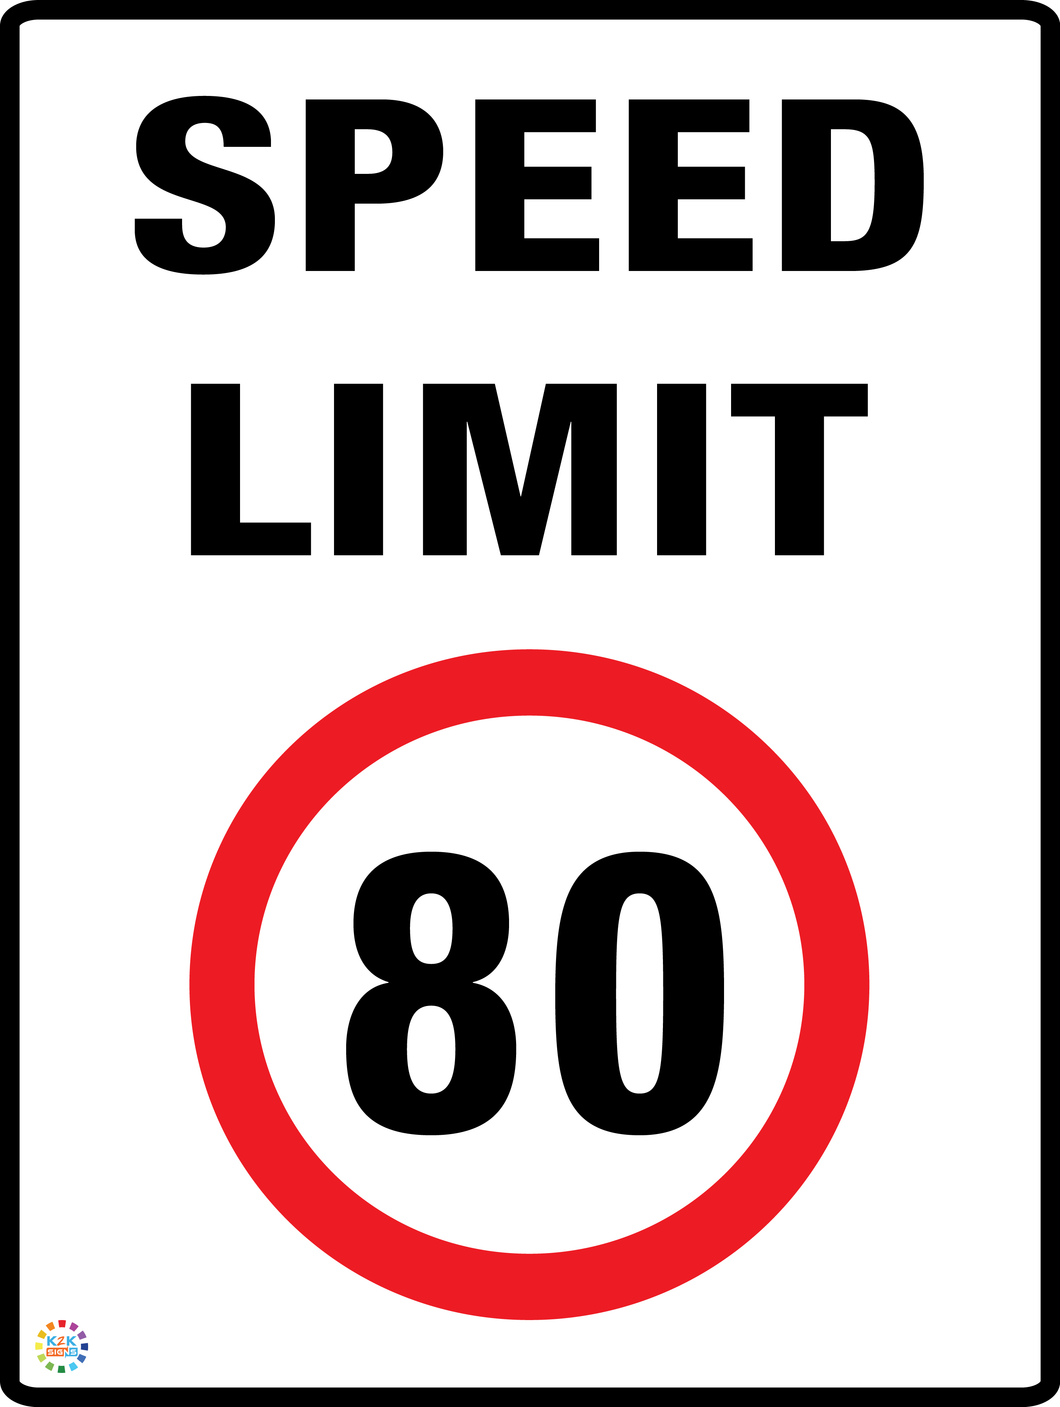 Speed Limit 80 Sign